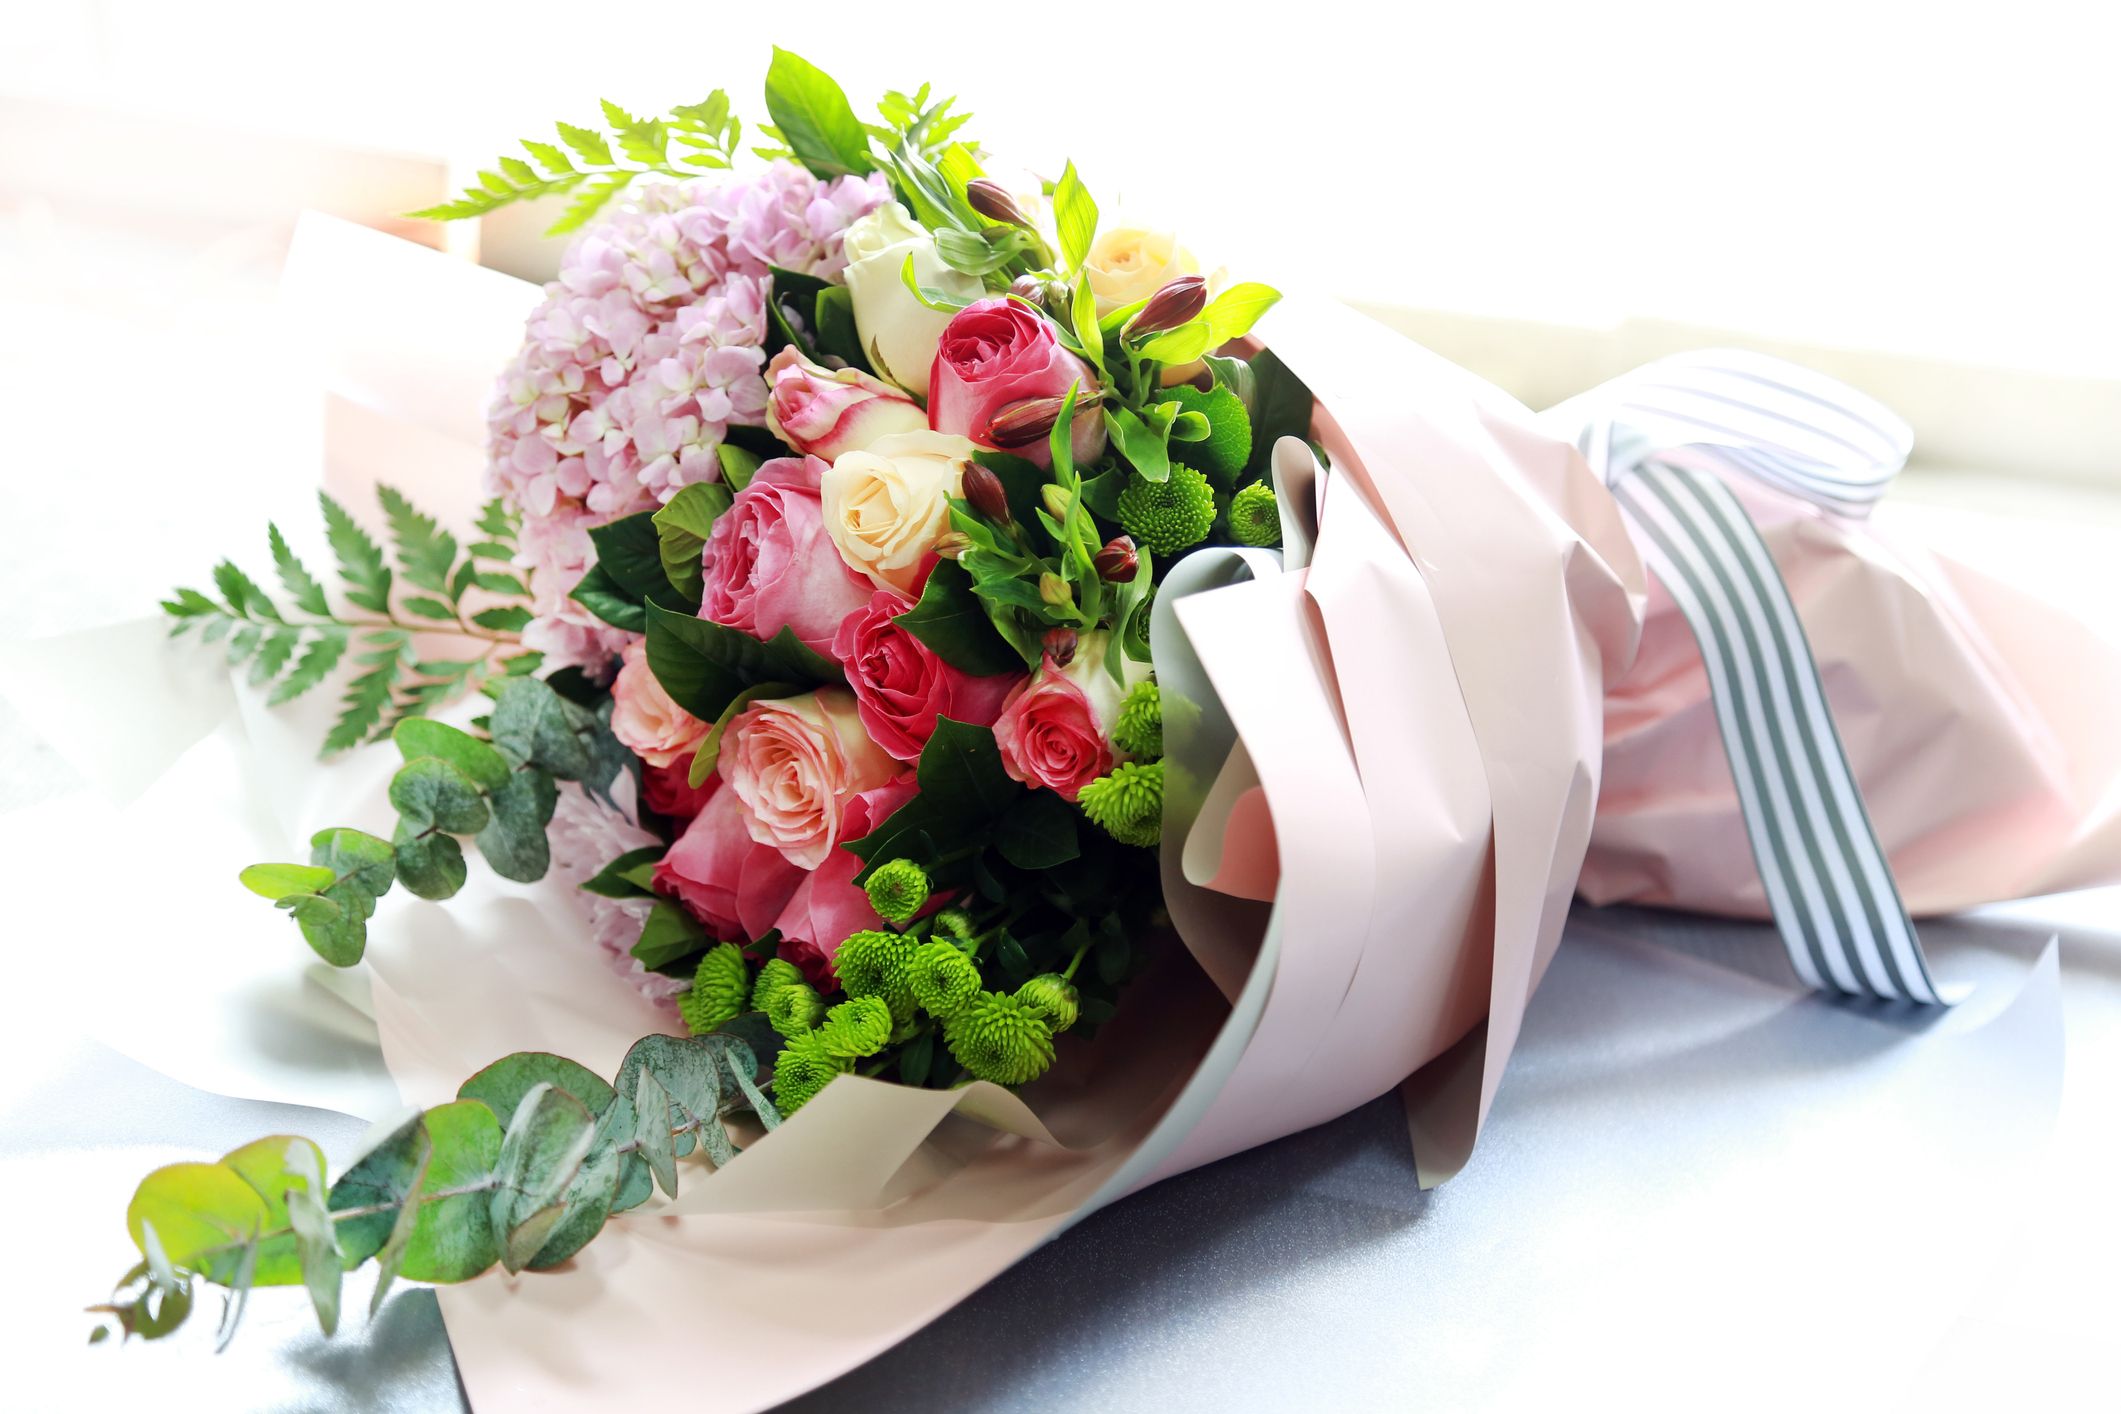 A bouquet of flowers. | Source: Shutterstock